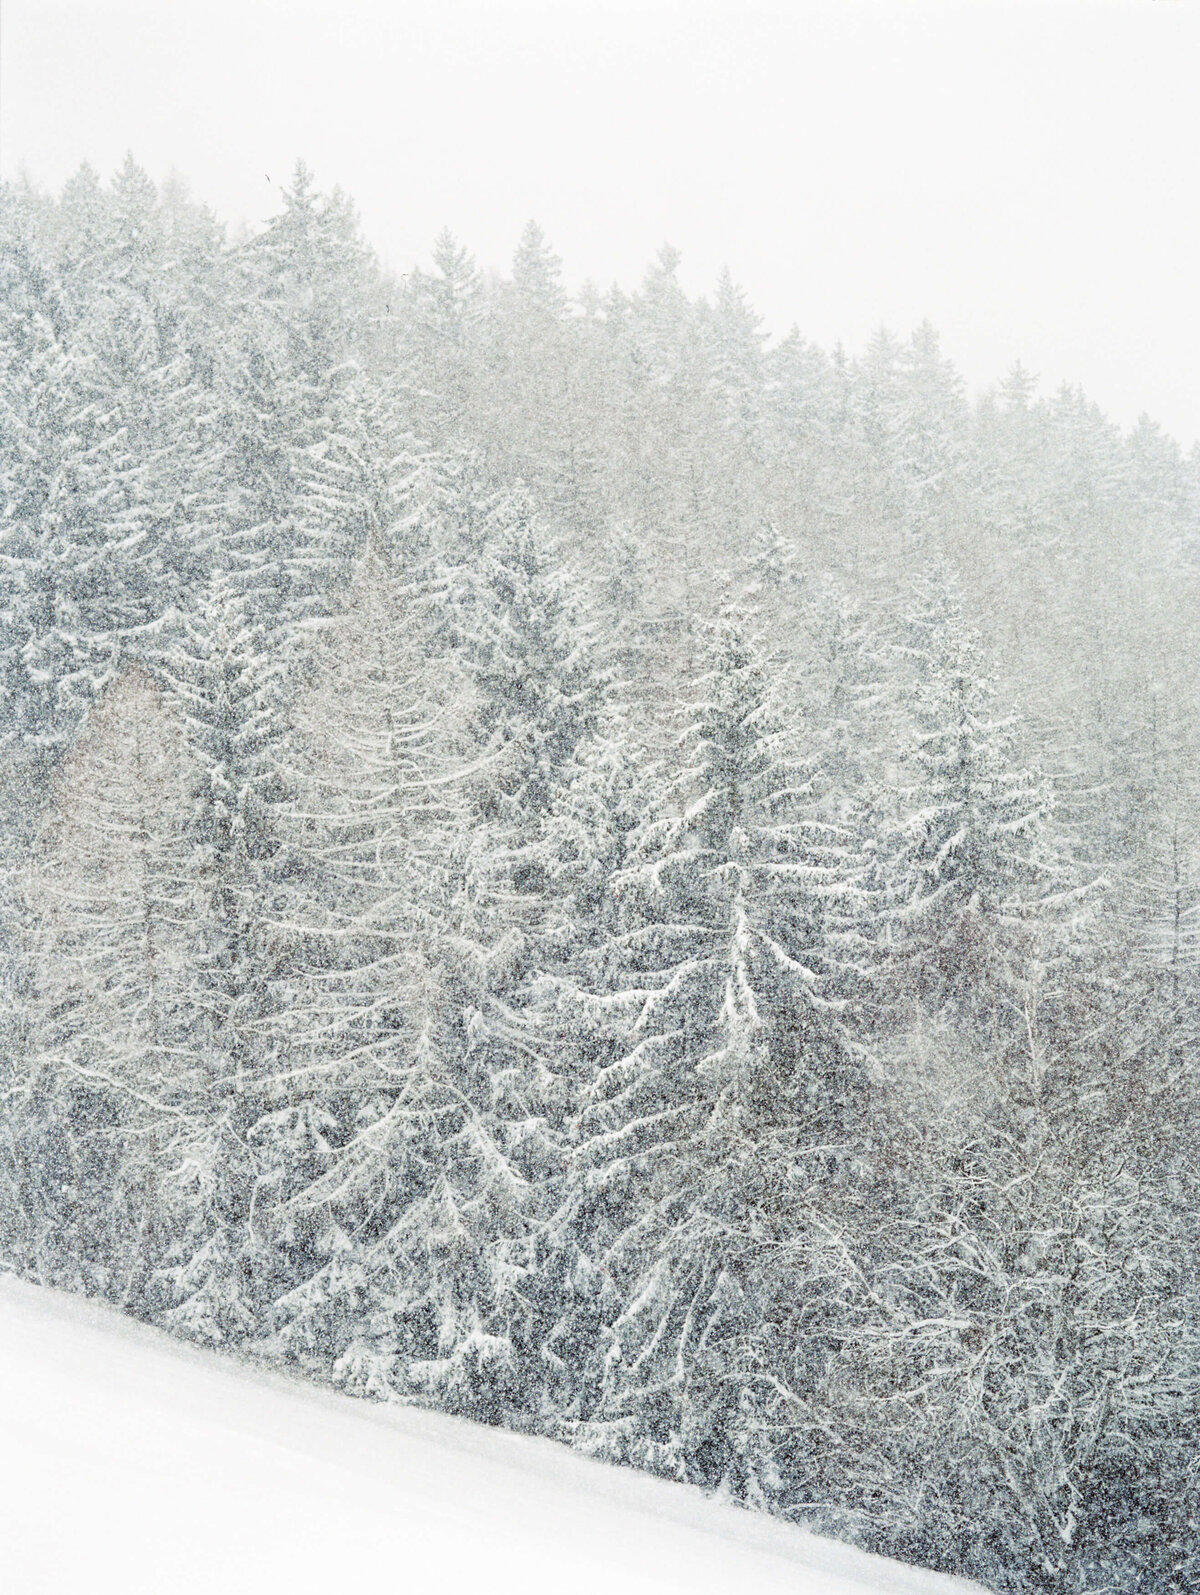 061-Mountain Winter Fine Art Photography